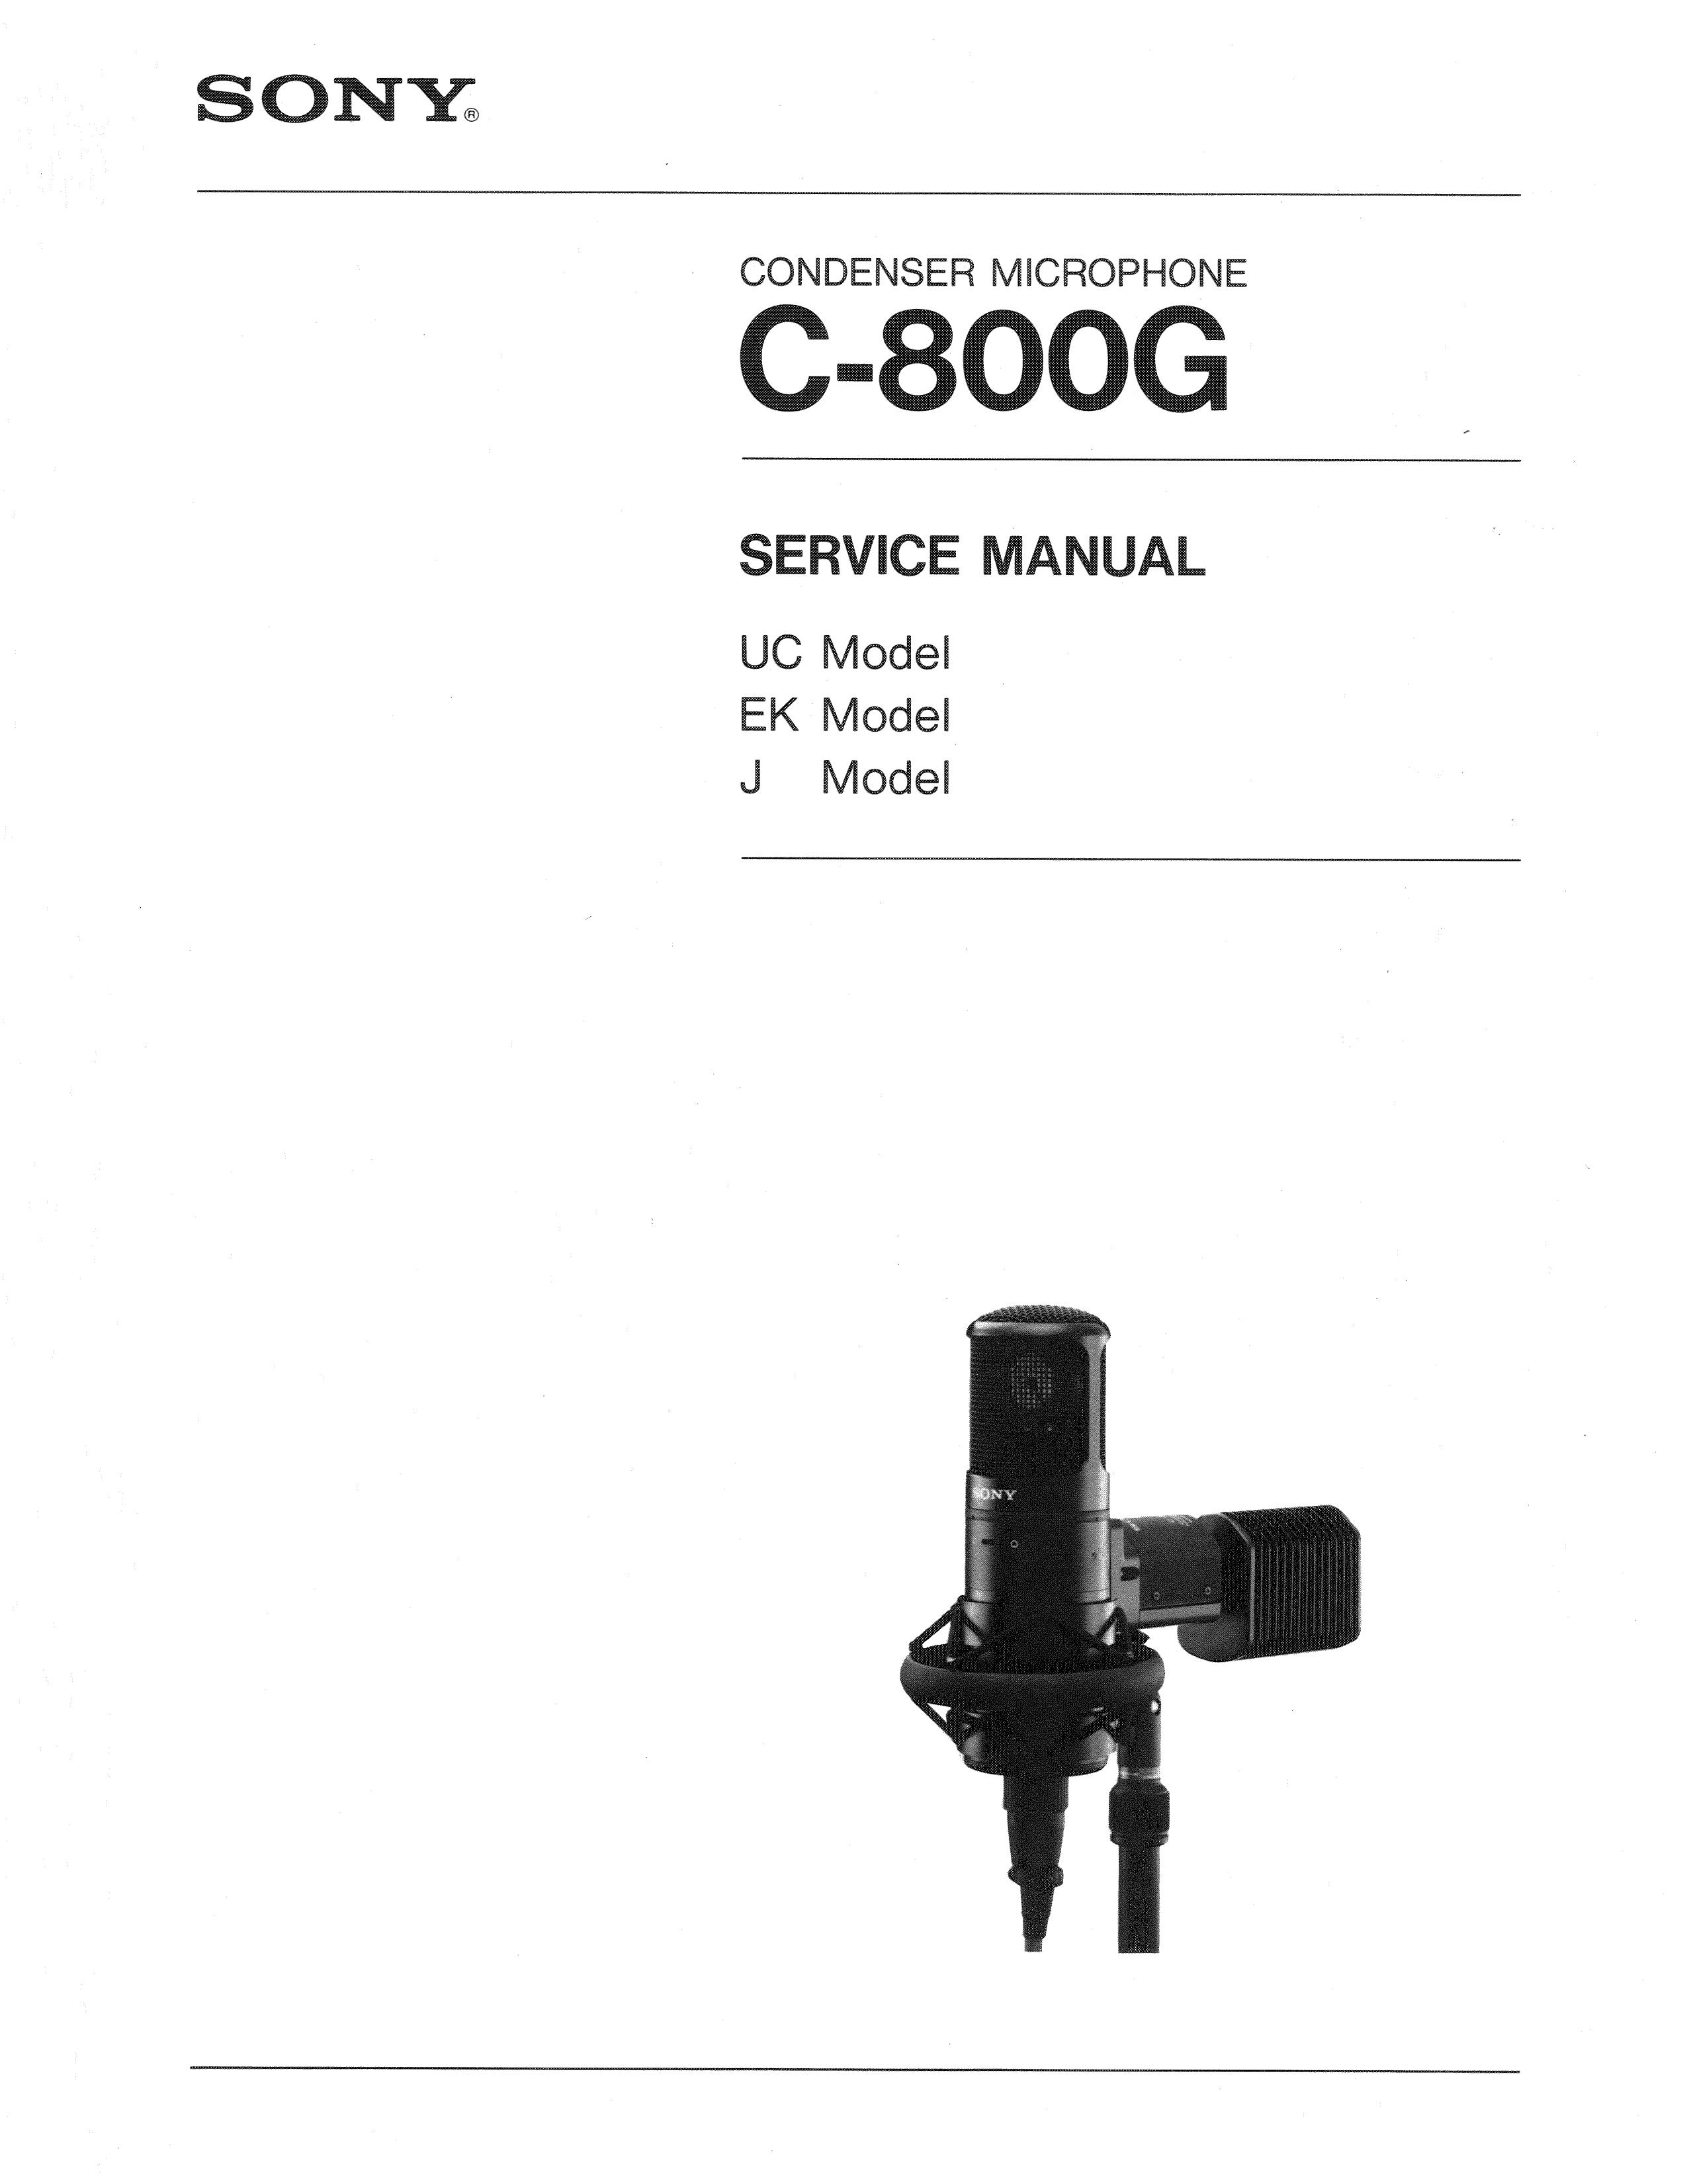 Sony C-800G Microphone User Manual